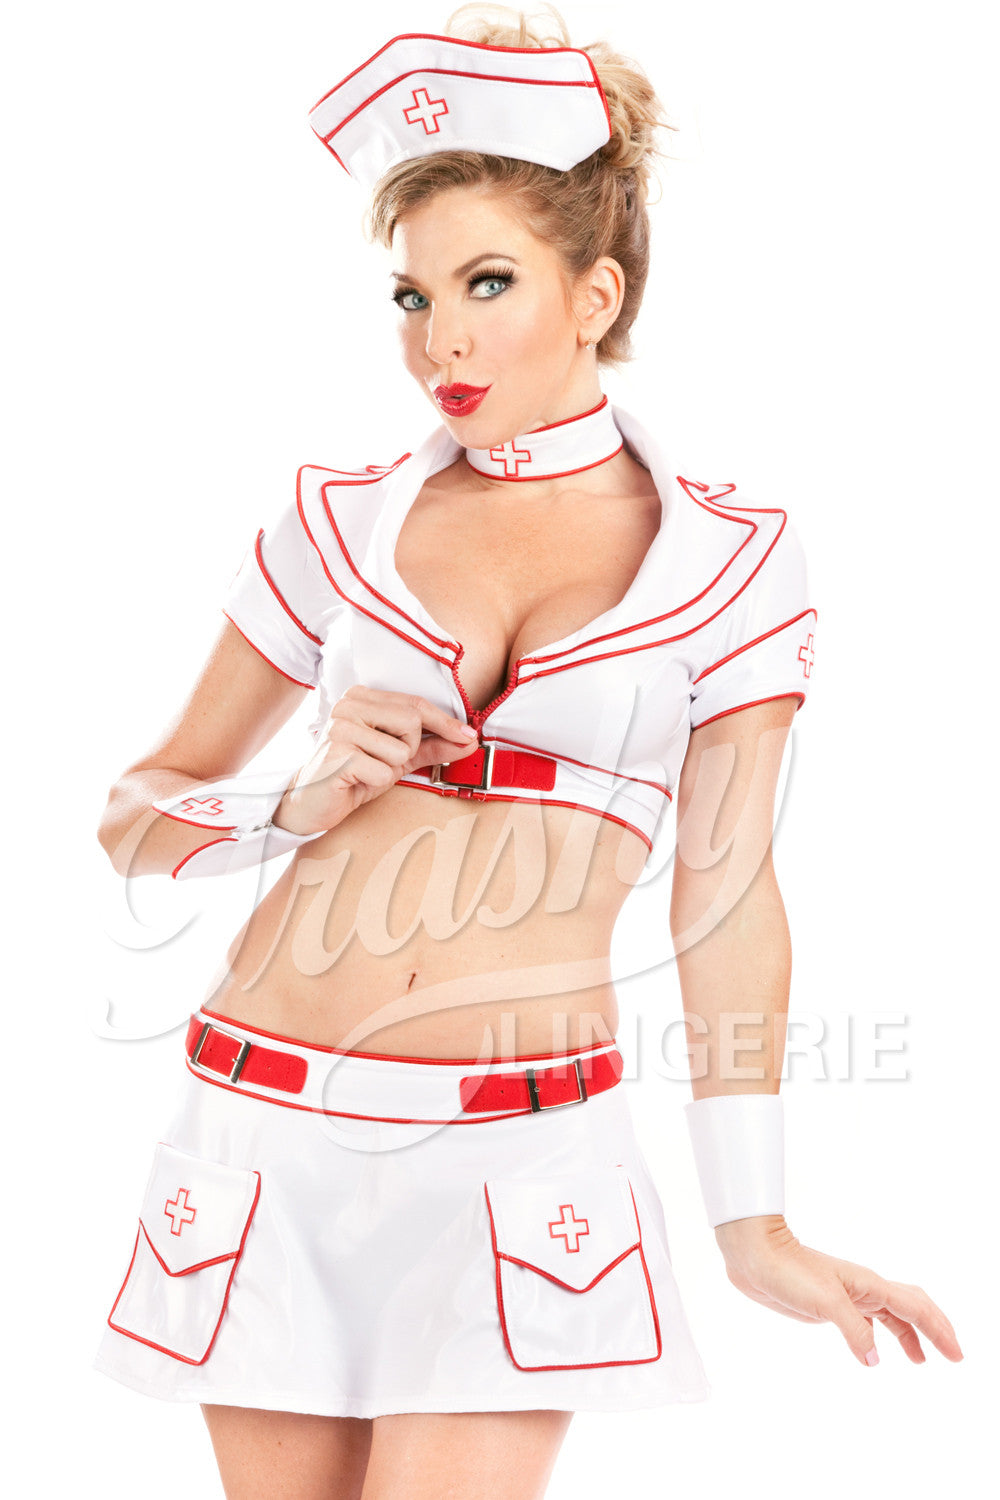 Buckle Nurse Top